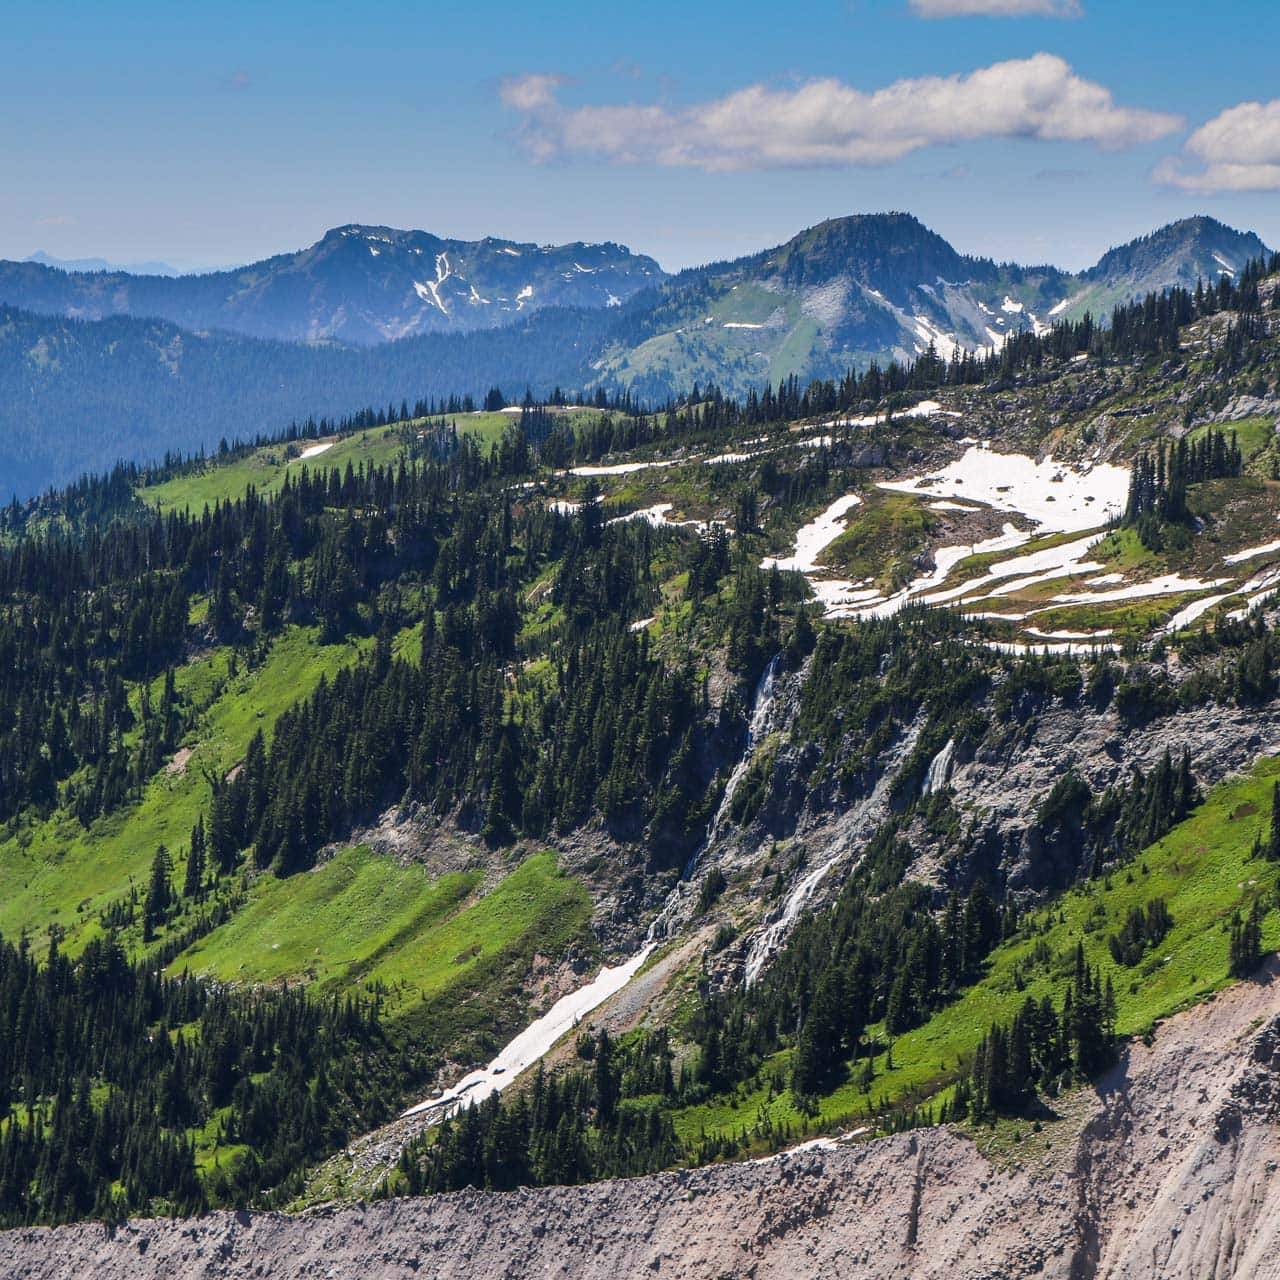 Mountain landscape in Mount Rainier National Park, Washington